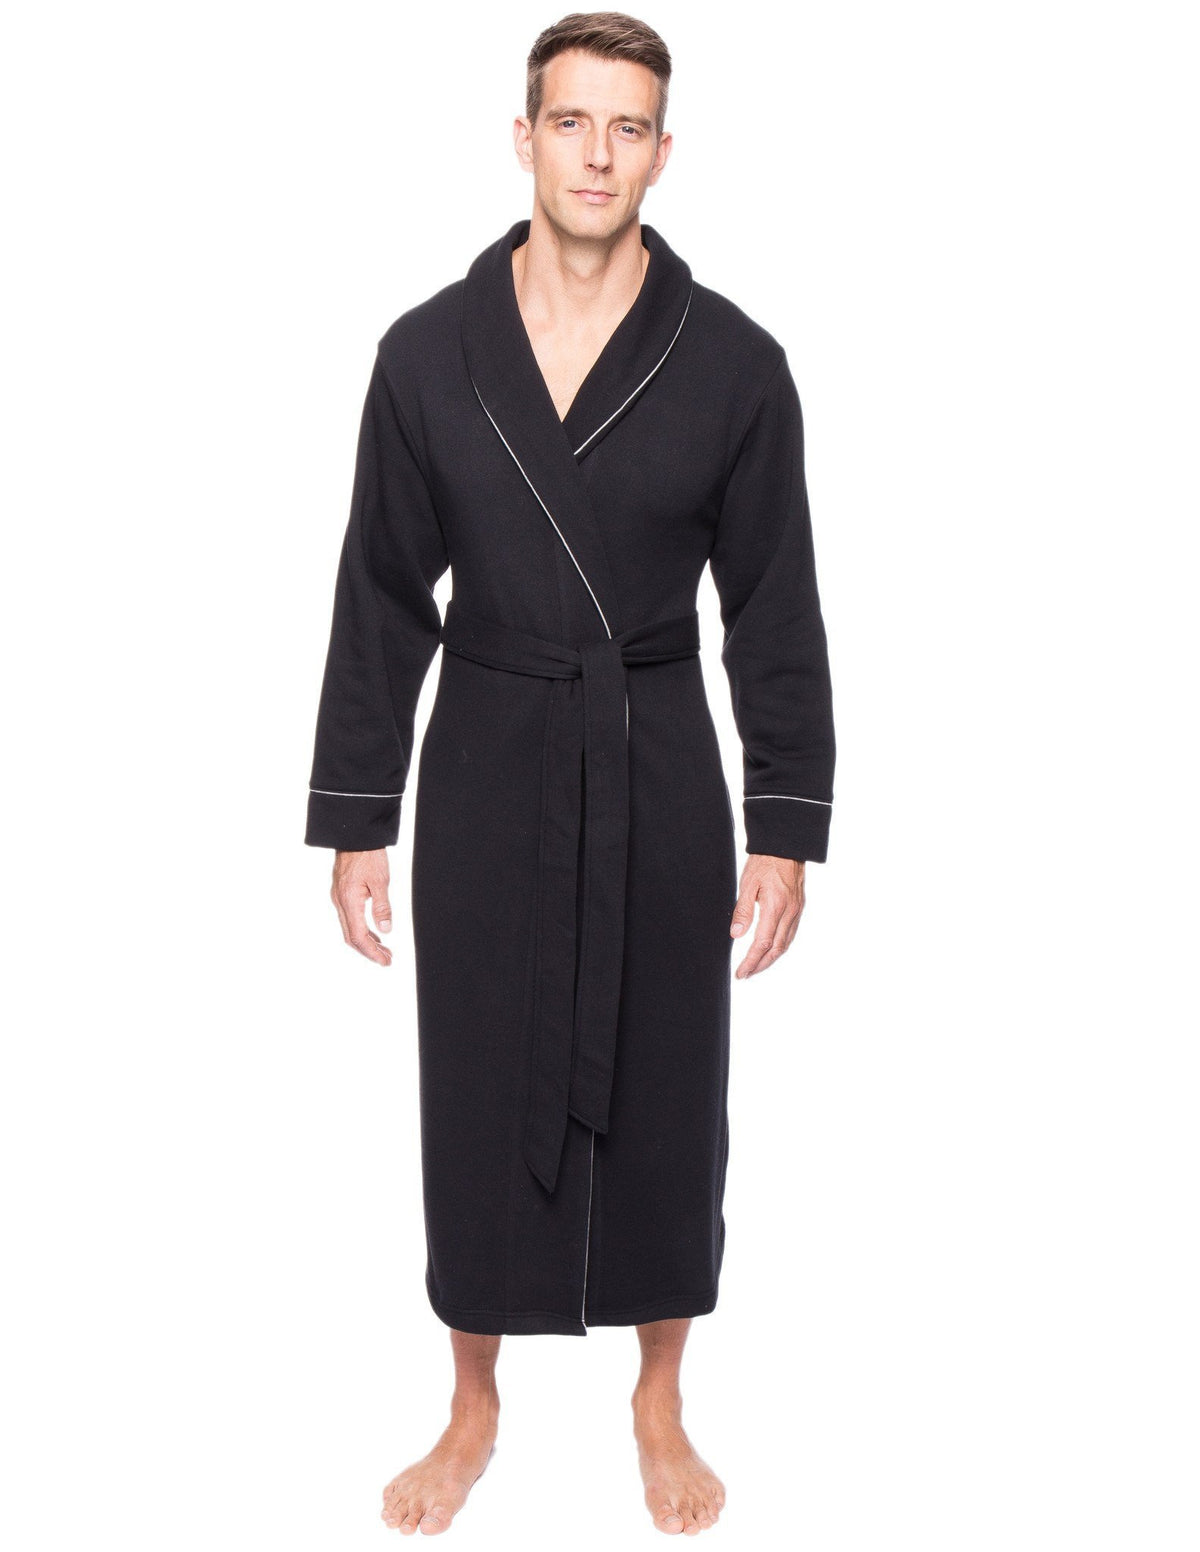 Men's Fleece Lined French Terry Robe - Black